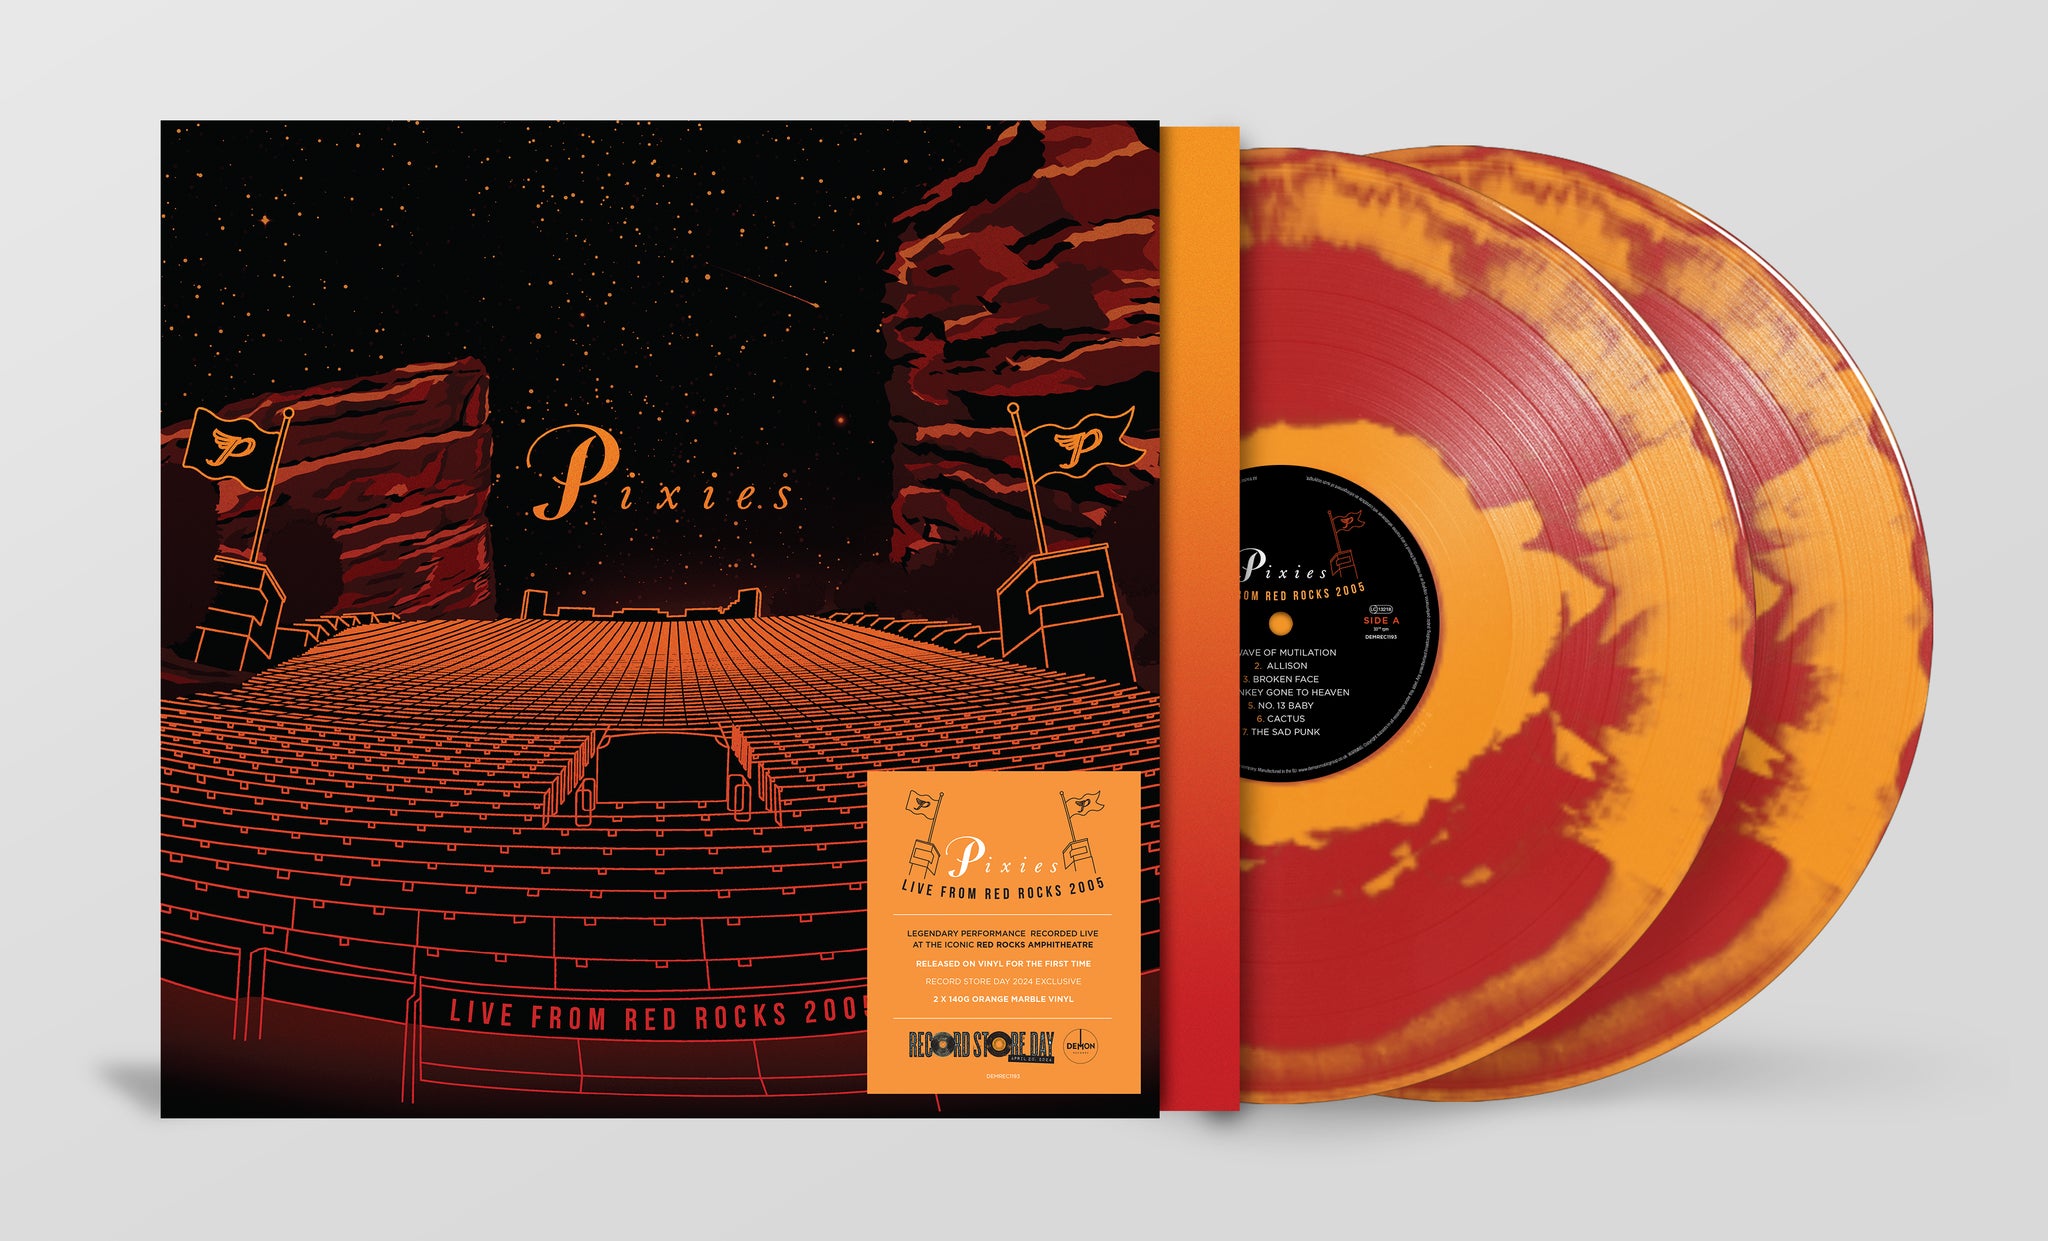 PIXIES - Live From Red Rocks 2005 (RSD 2024) - 2 LP - 140g Orange Marble Vinyl  [RSD 2024]